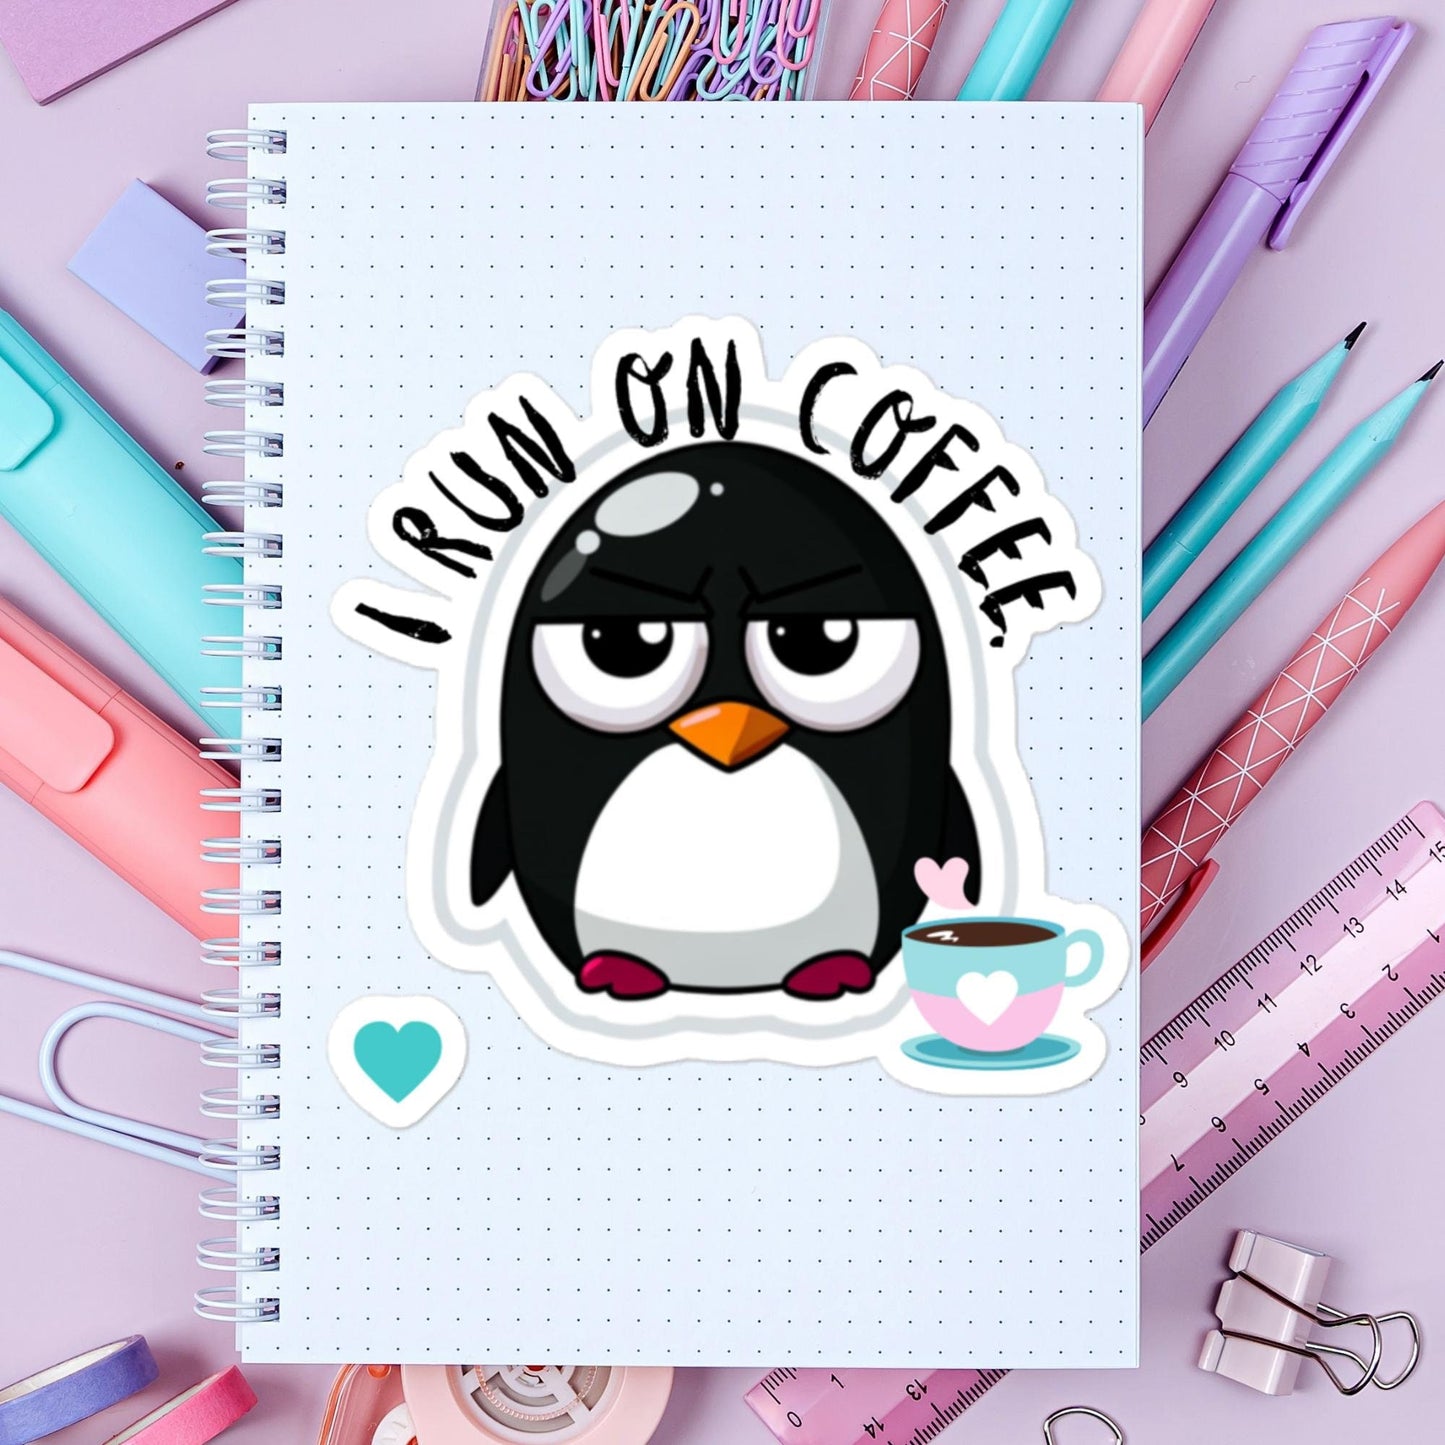 Penguin I Run On Coffee sticker Funny cute animal penguin sticker Coffee HumorBubble-free stickers